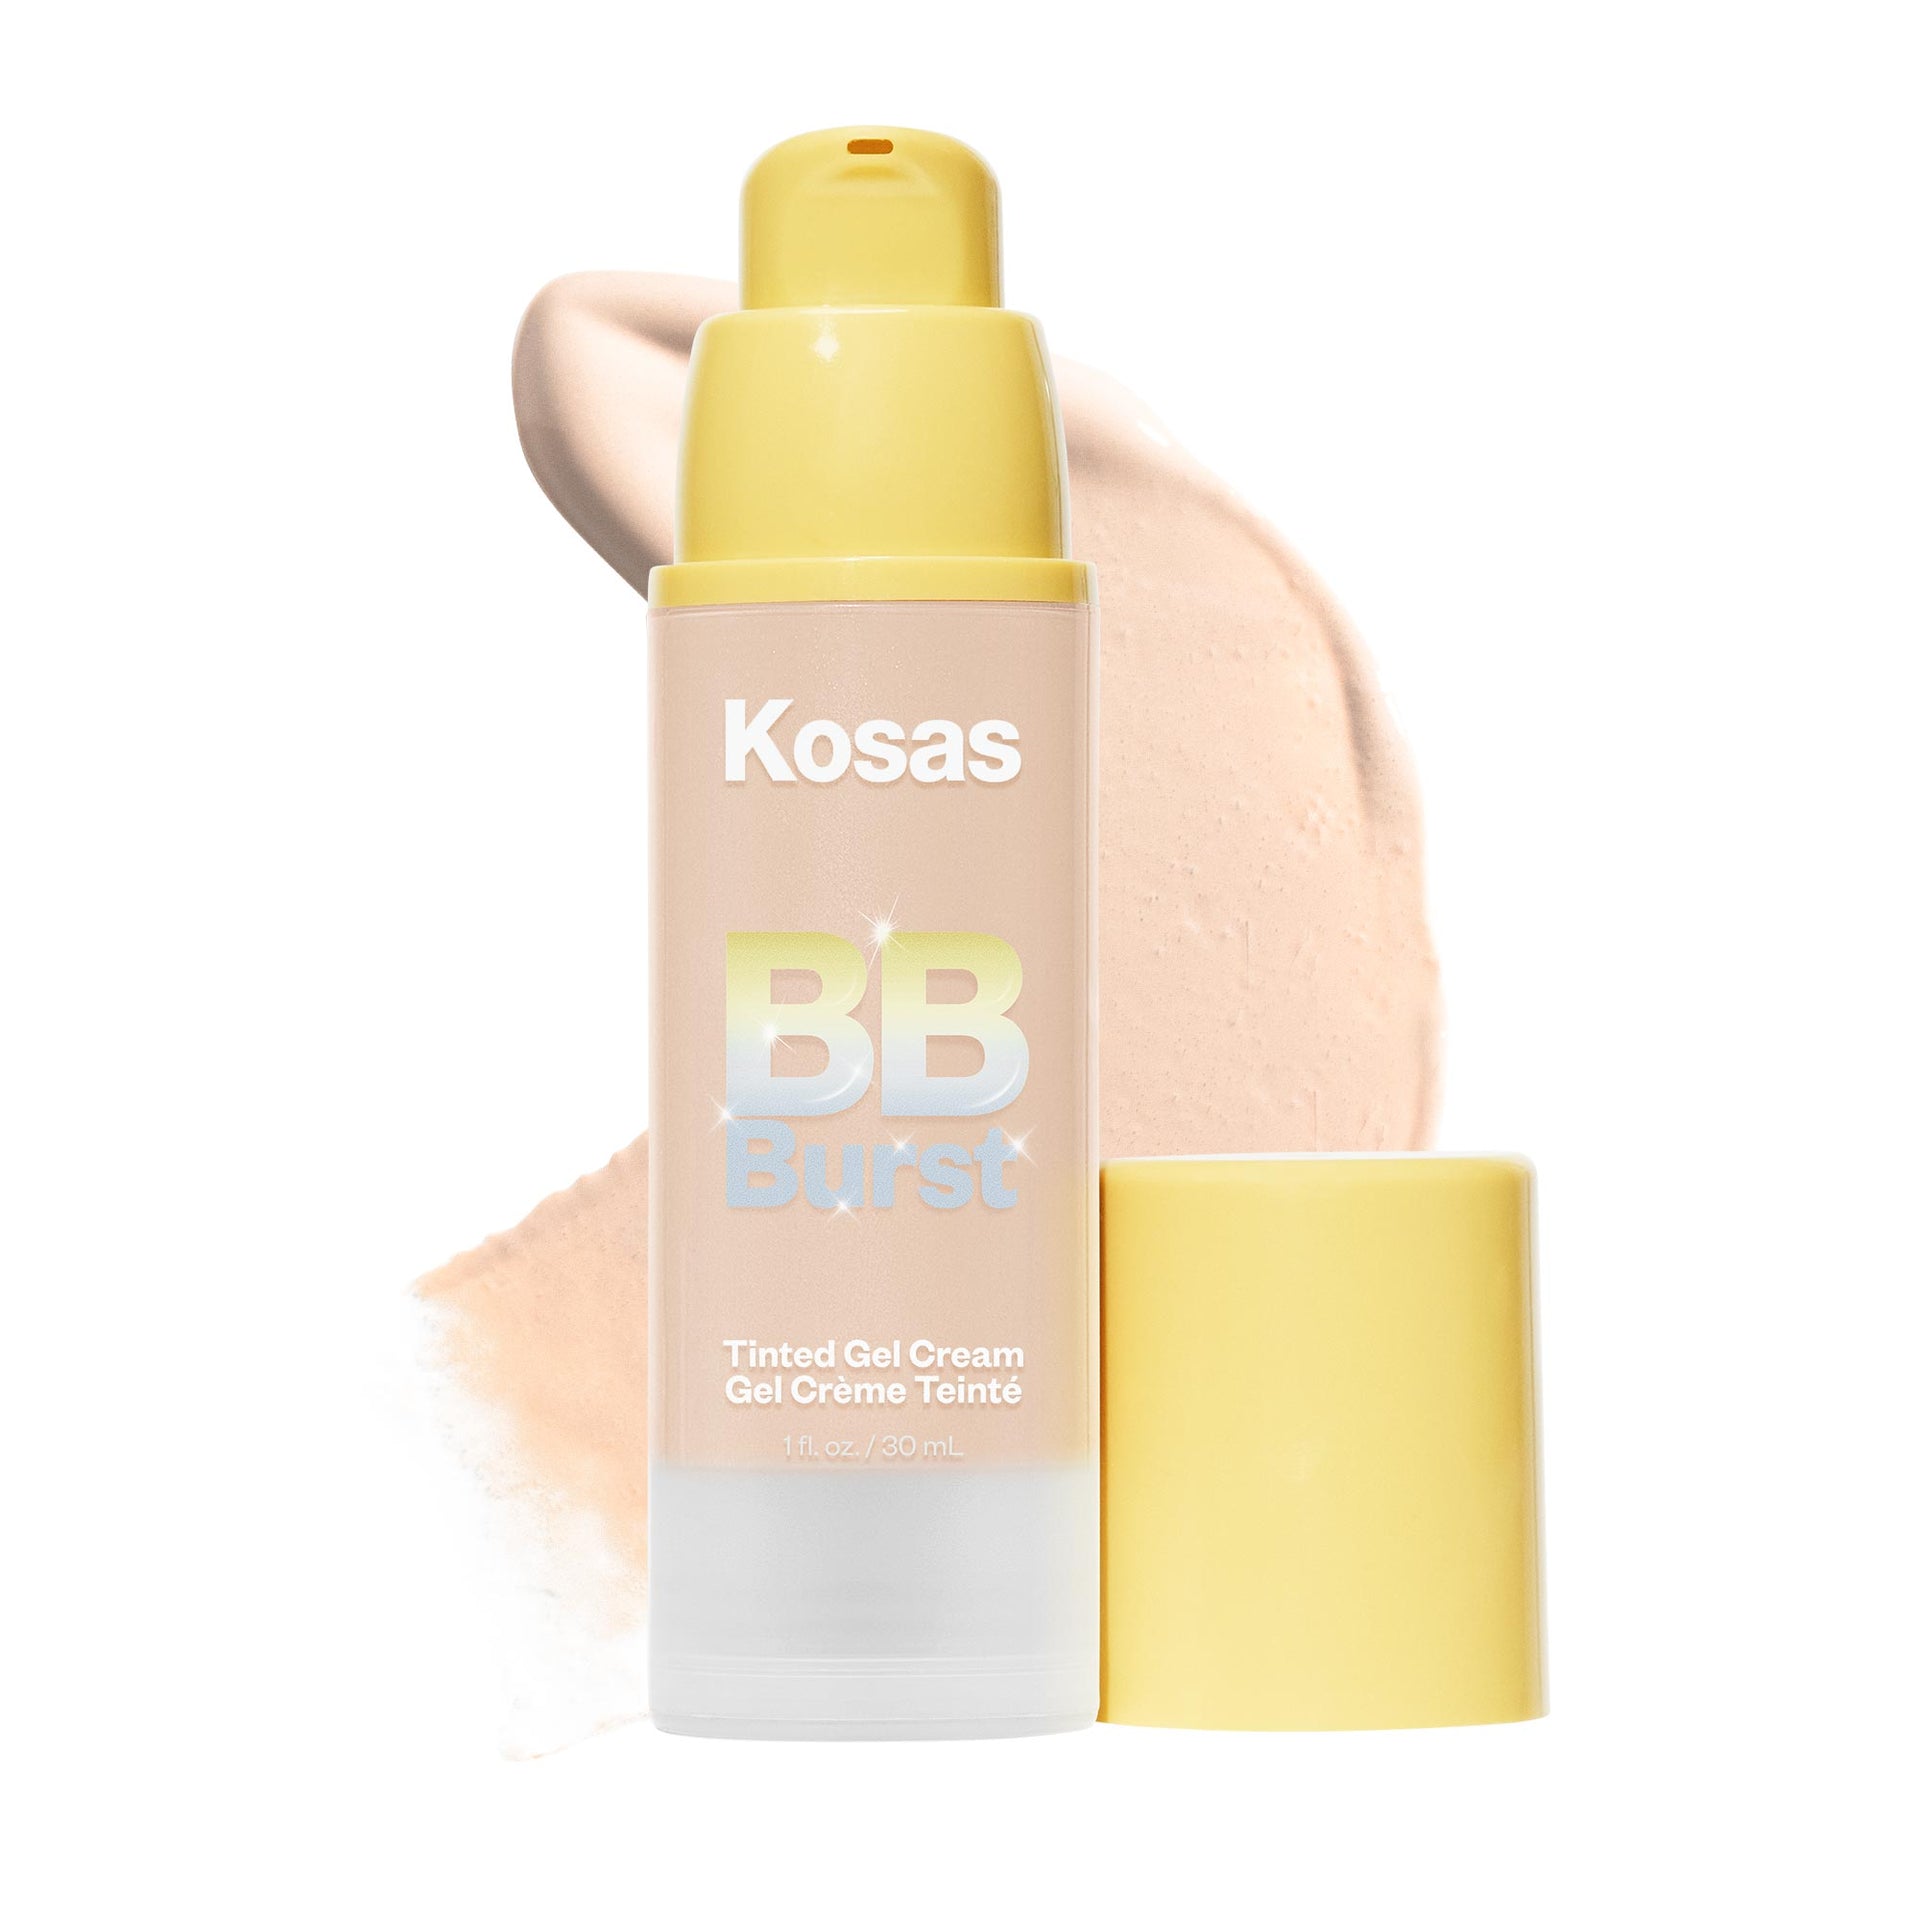 Kosas BB Burst in the shade Light Cool 13